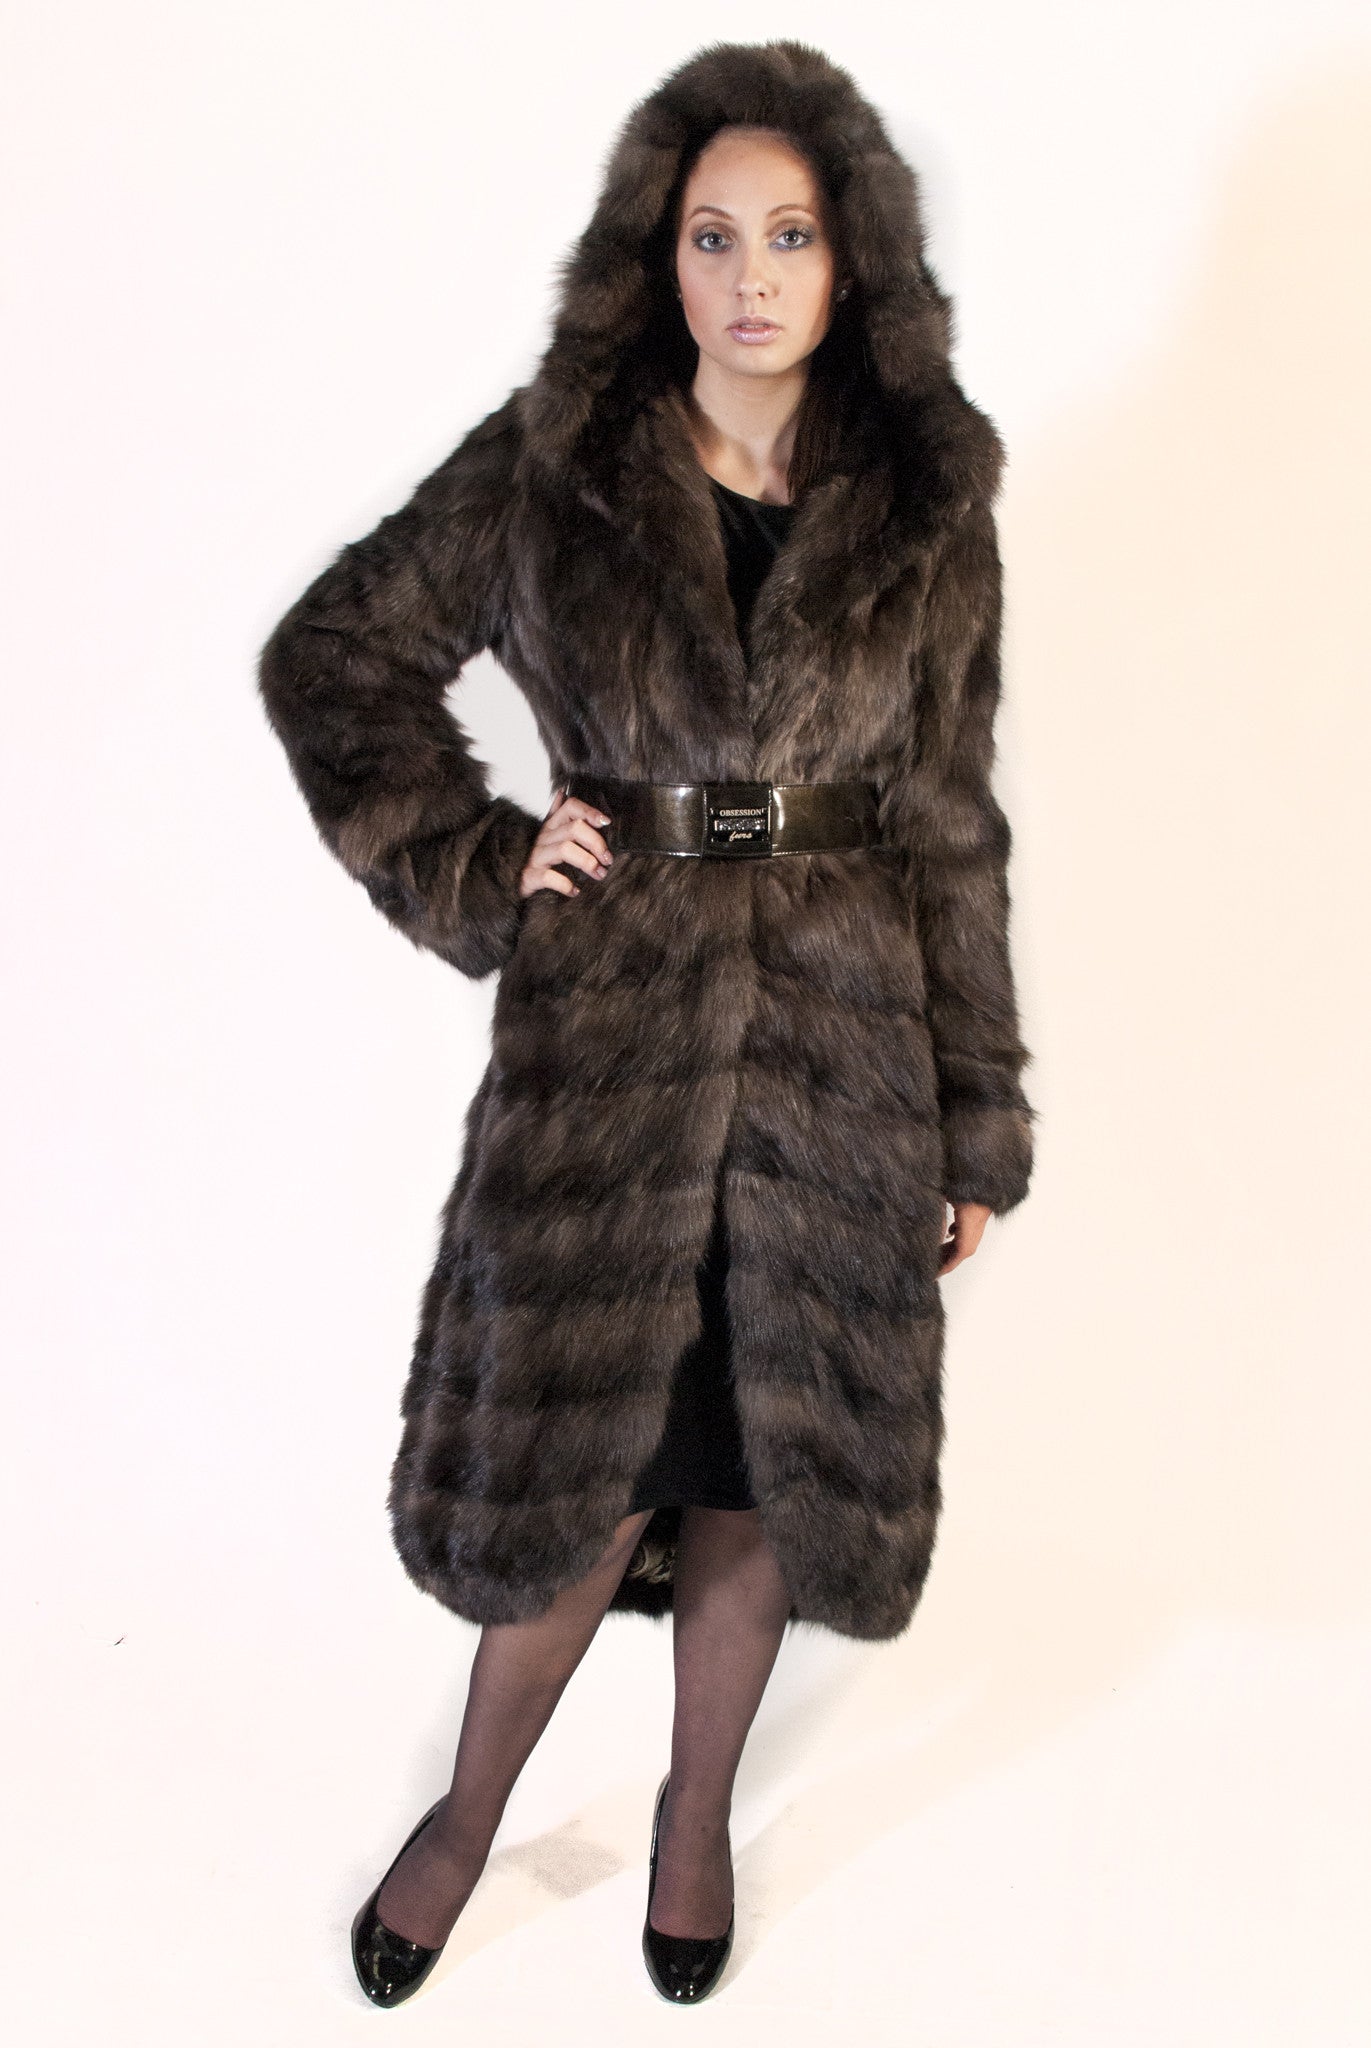 WEB SPECIAL - Horizontal Russian Sable Hi-Lo Coat with Hood - alexandros-furs